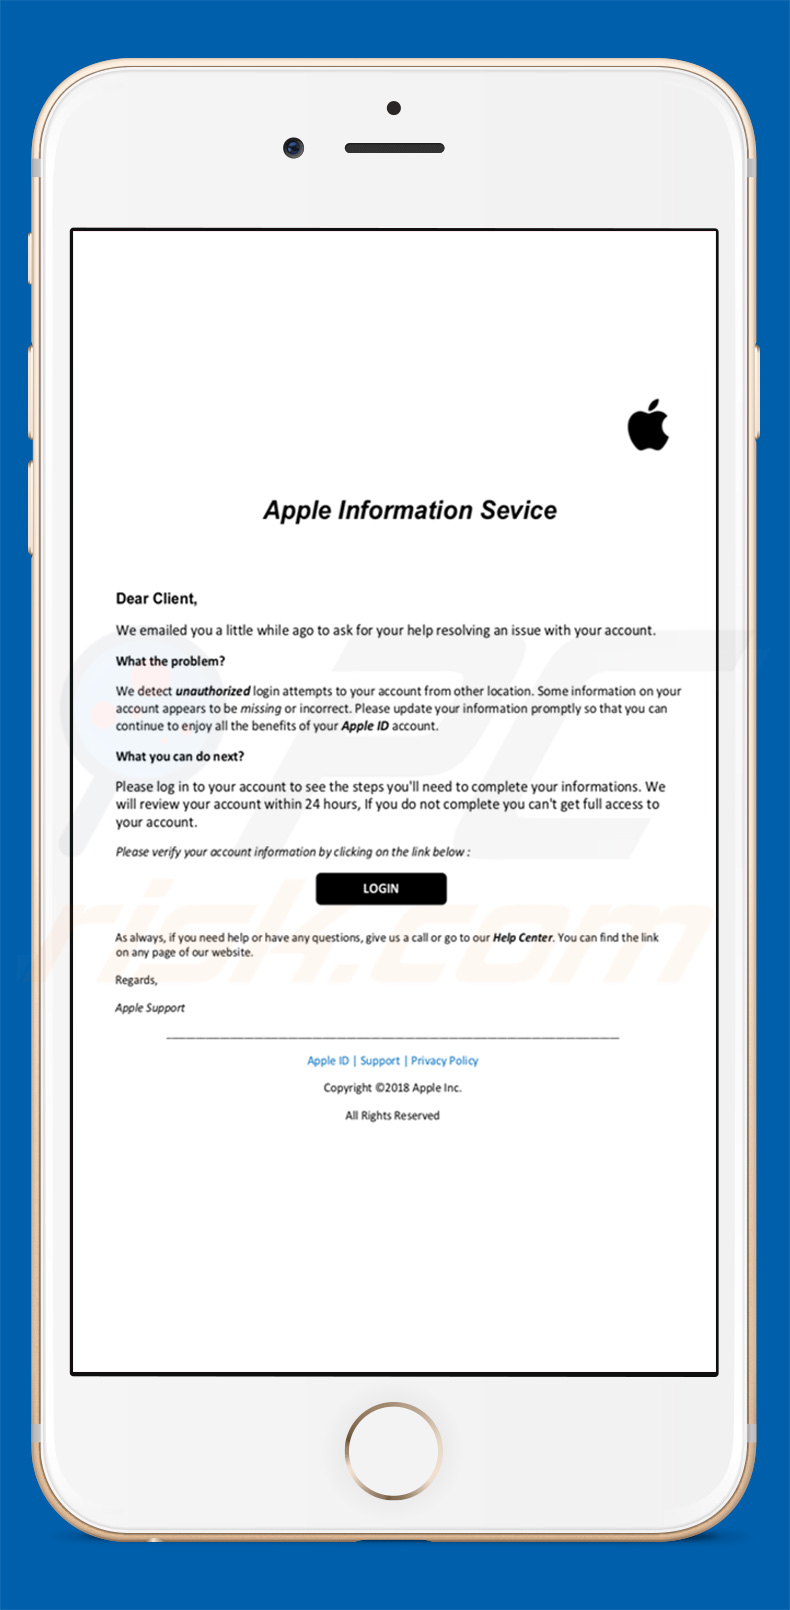 Apple Email Virus a roubar contas